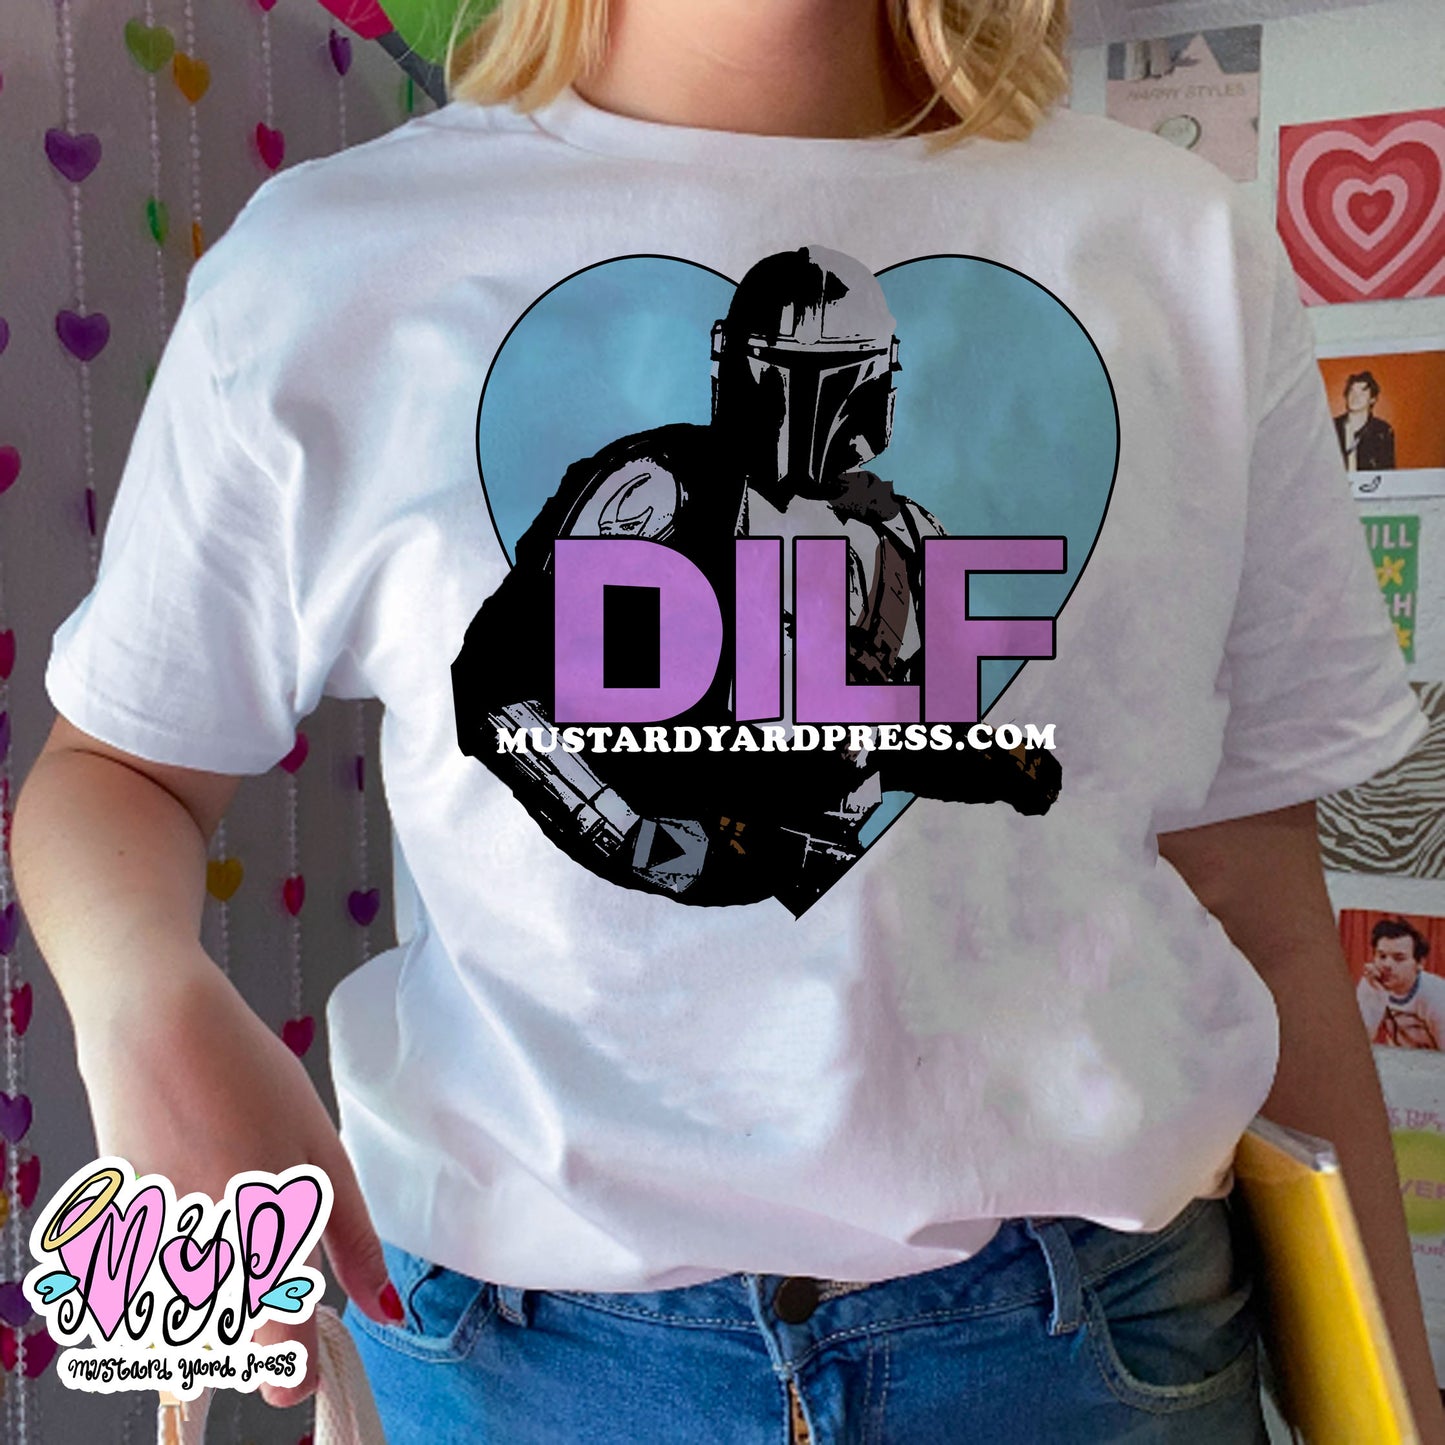 dilf t-shirt